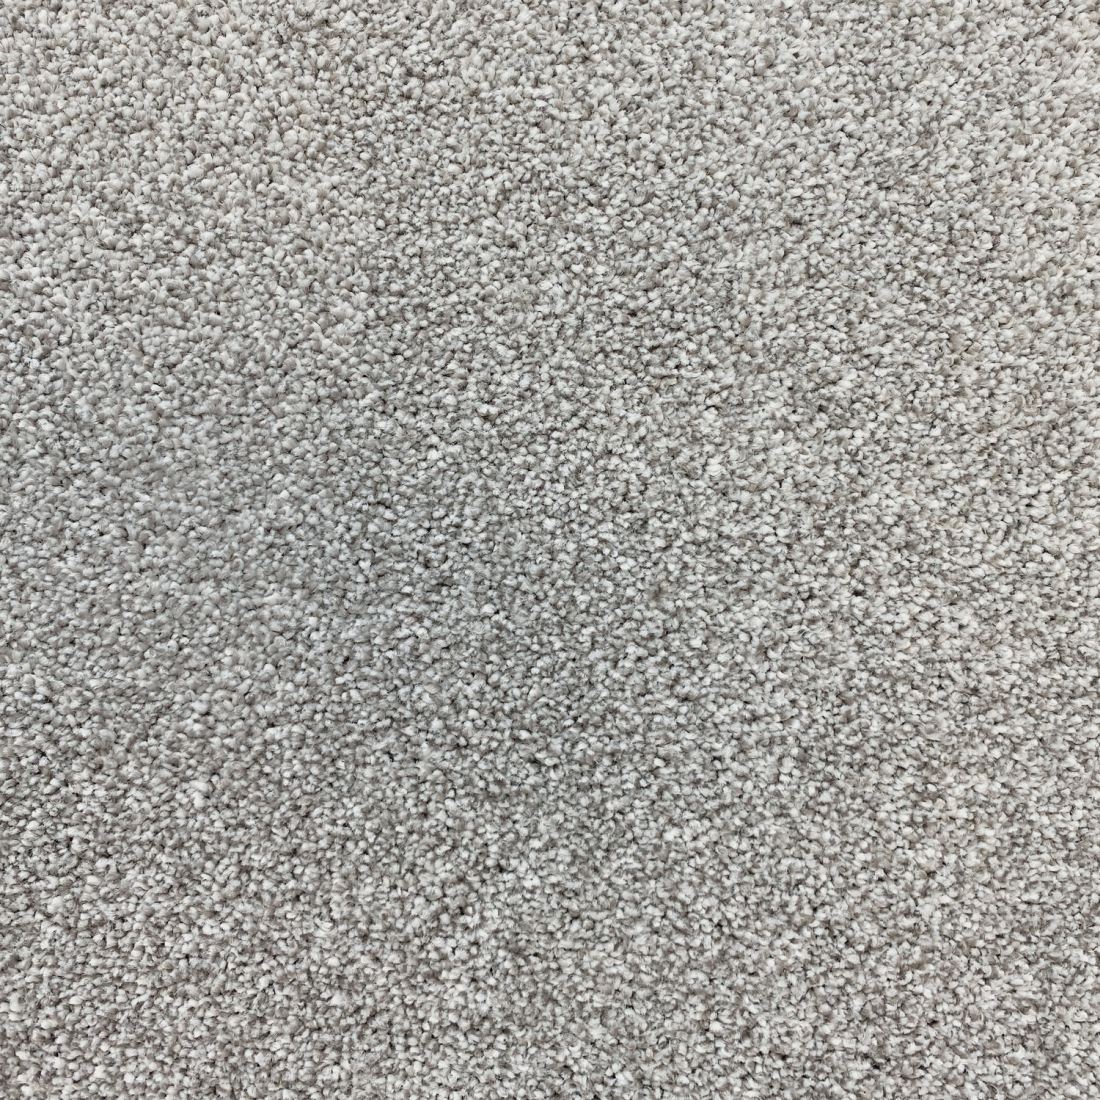 Invincible Rustic Stain Resistant Twist Carpet - Eminence